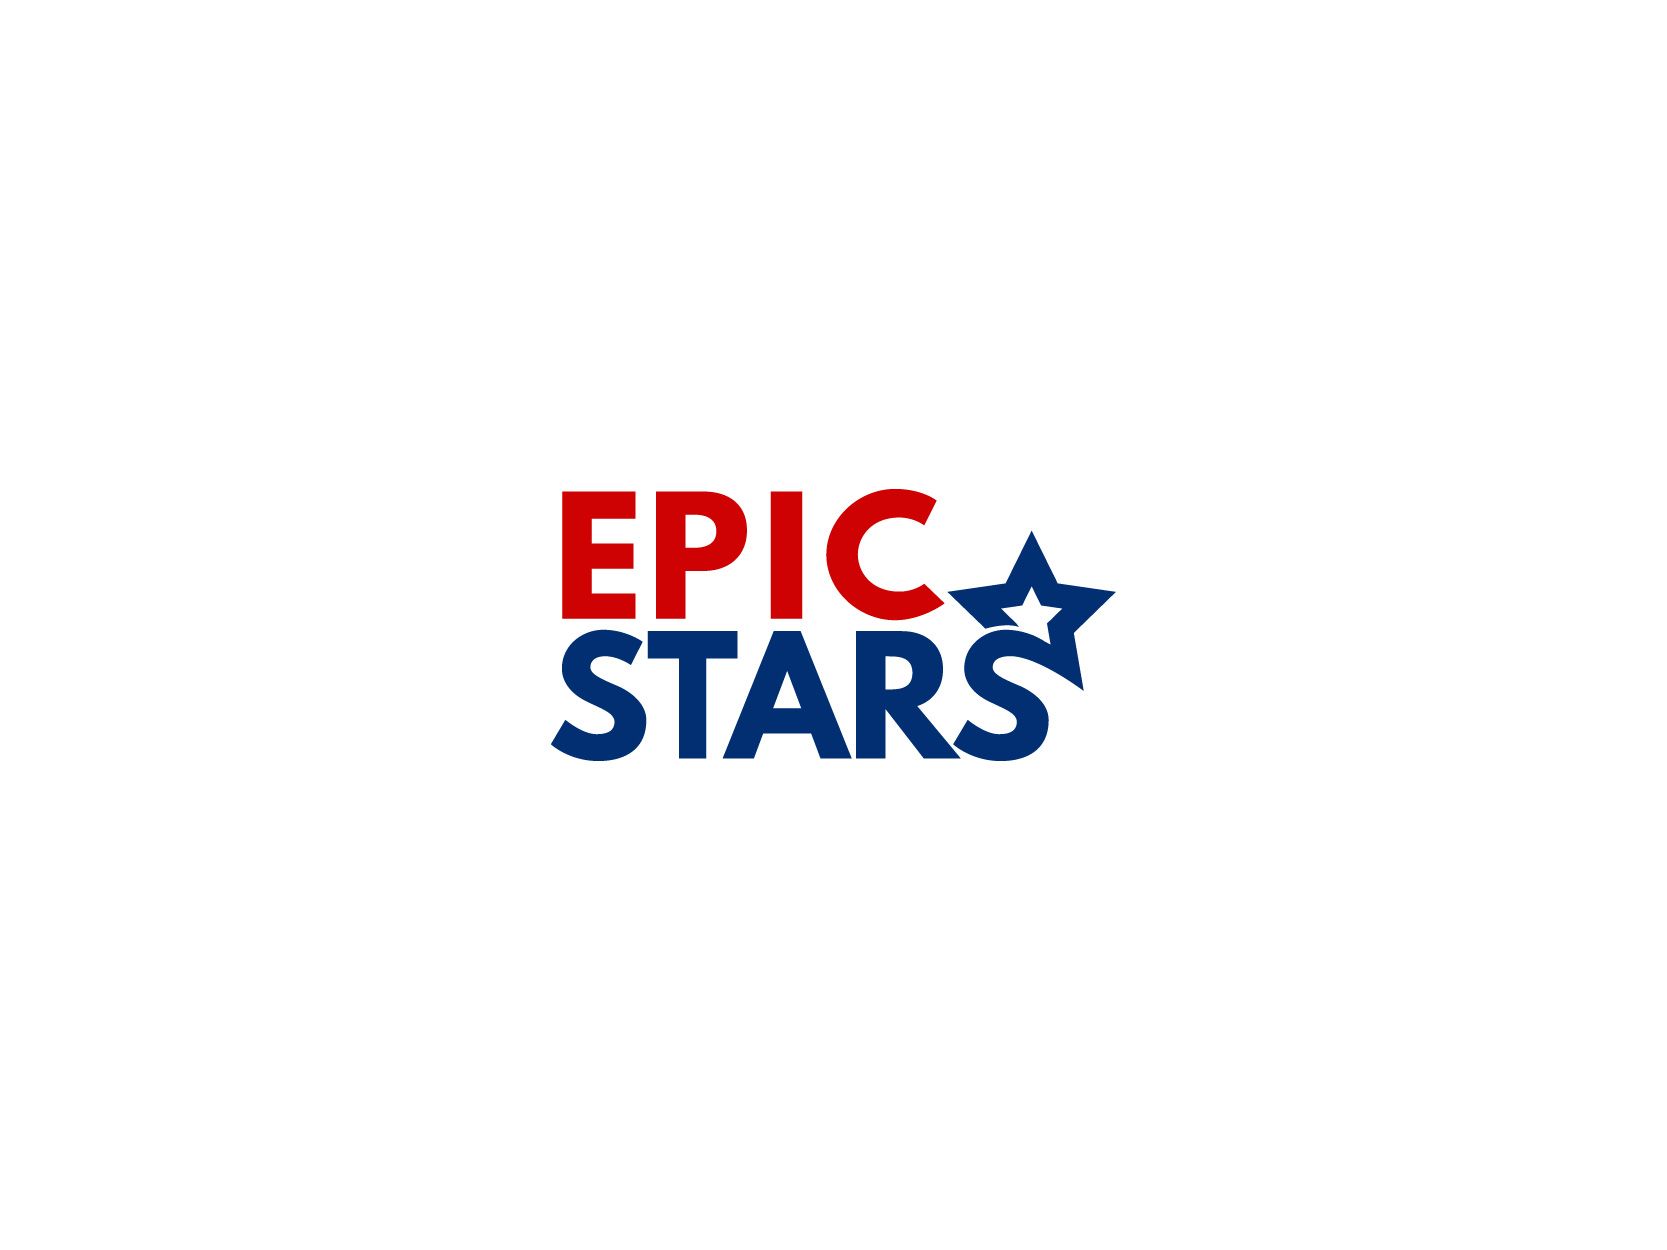 Логотип для EPIC ★ STARS - дизайнер Kate_fiero